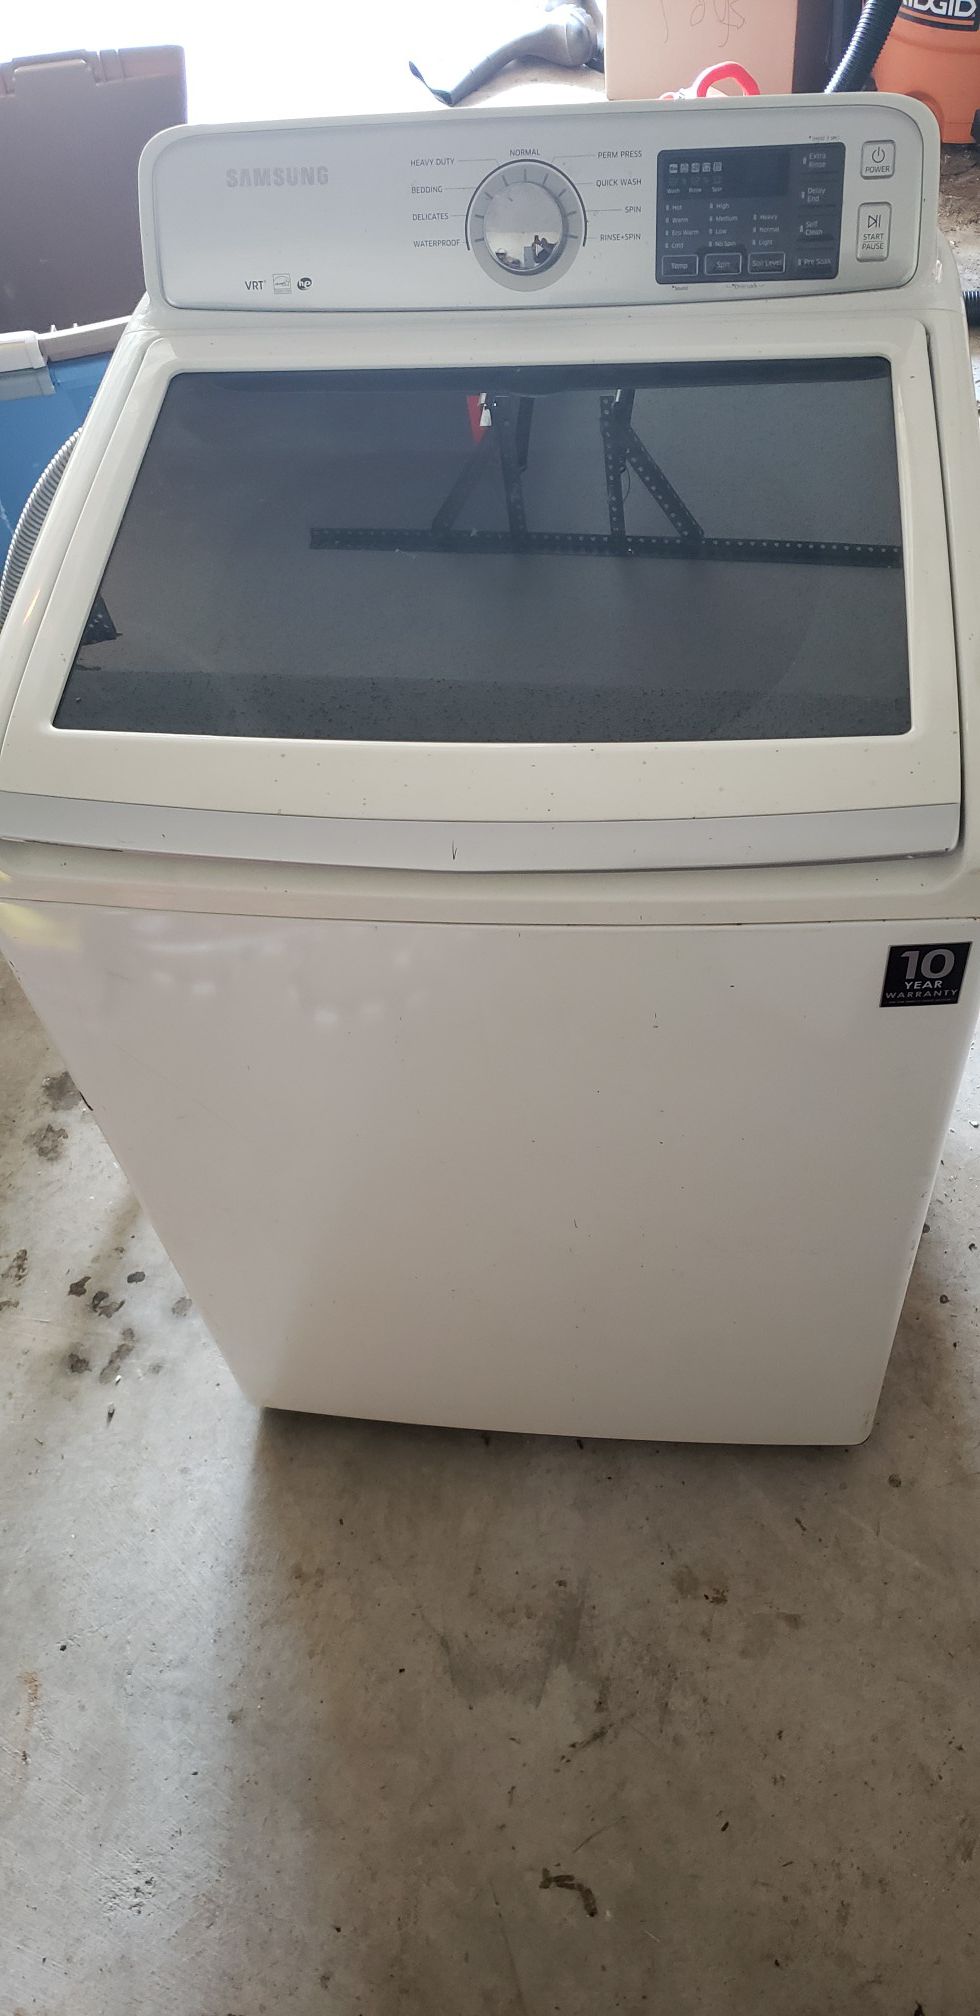 Samsung high efficiency washer (no agitator)